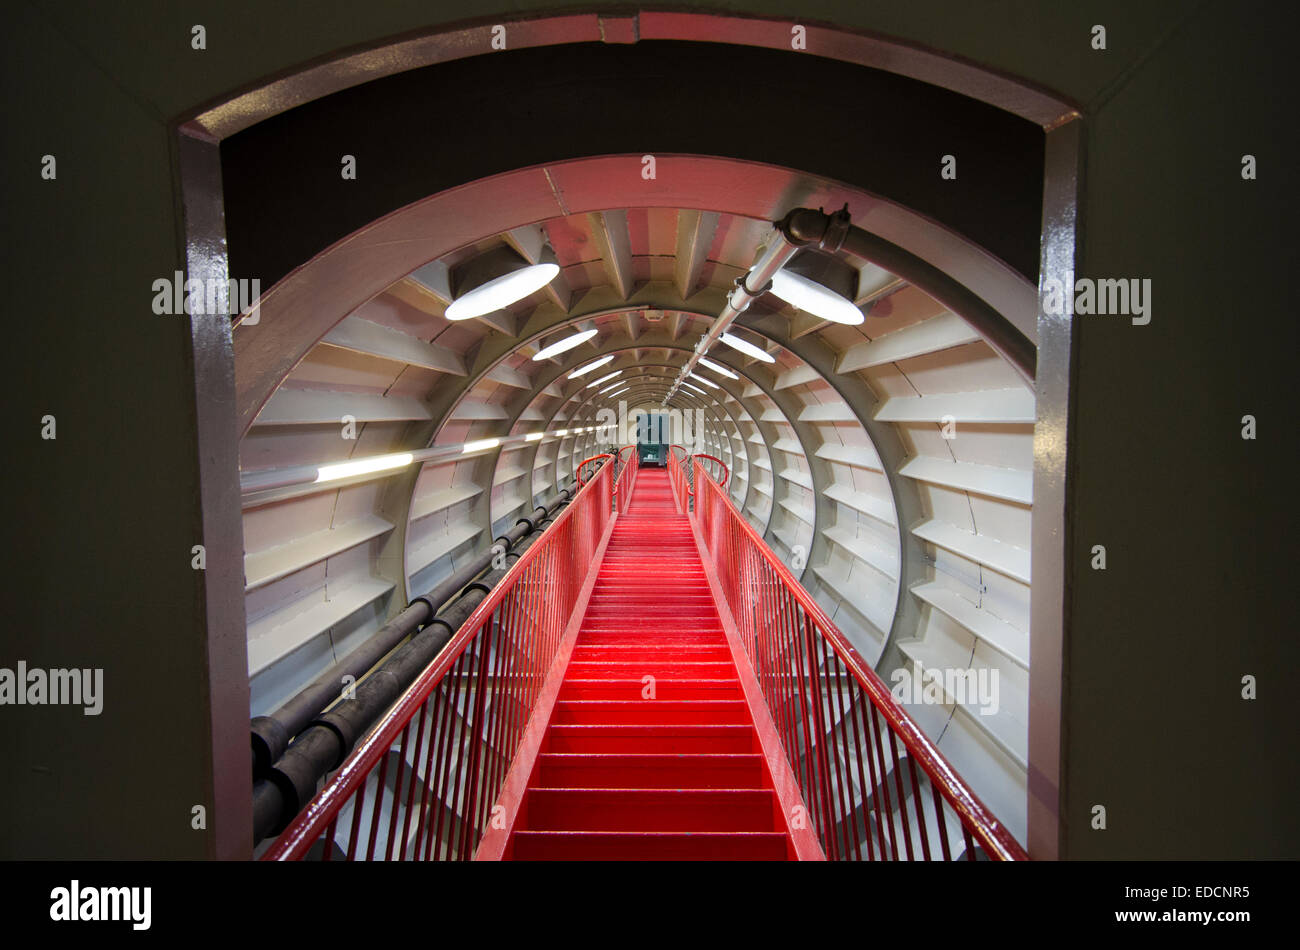 Iluminación de escaleras fotografías e imágenes de alta resolución - Alamy